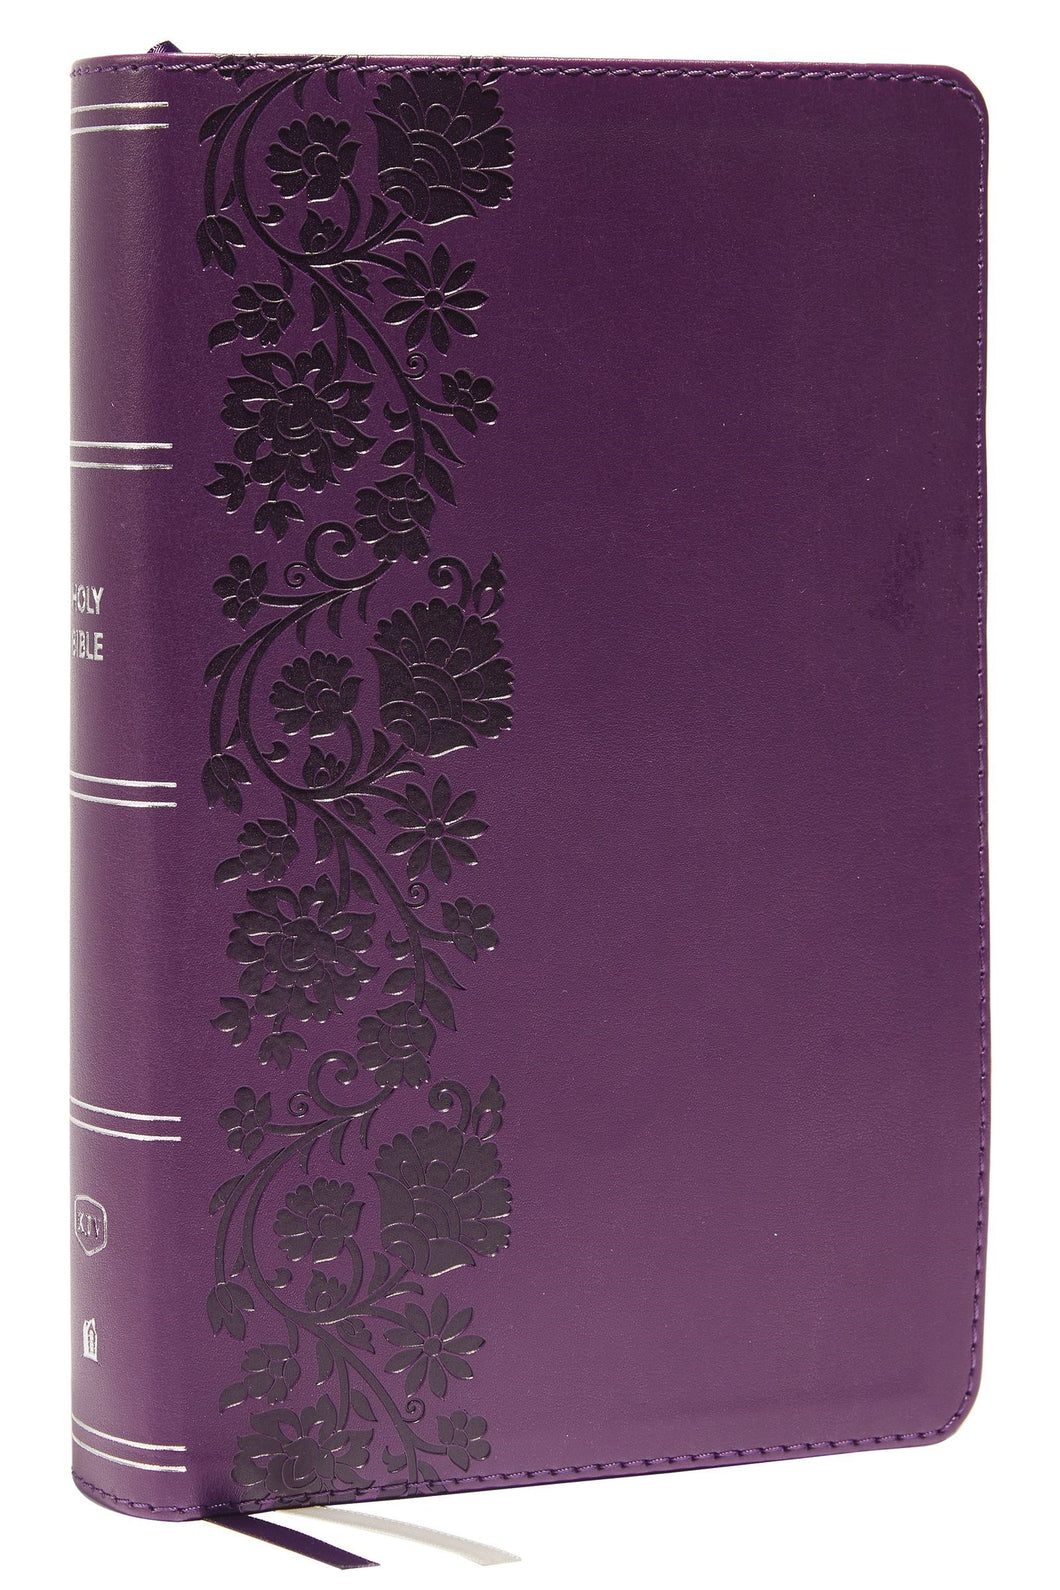 KJV Personal Size Large Print Single-Column Reference Bible (Comfort Print)-Purple Leathersoft